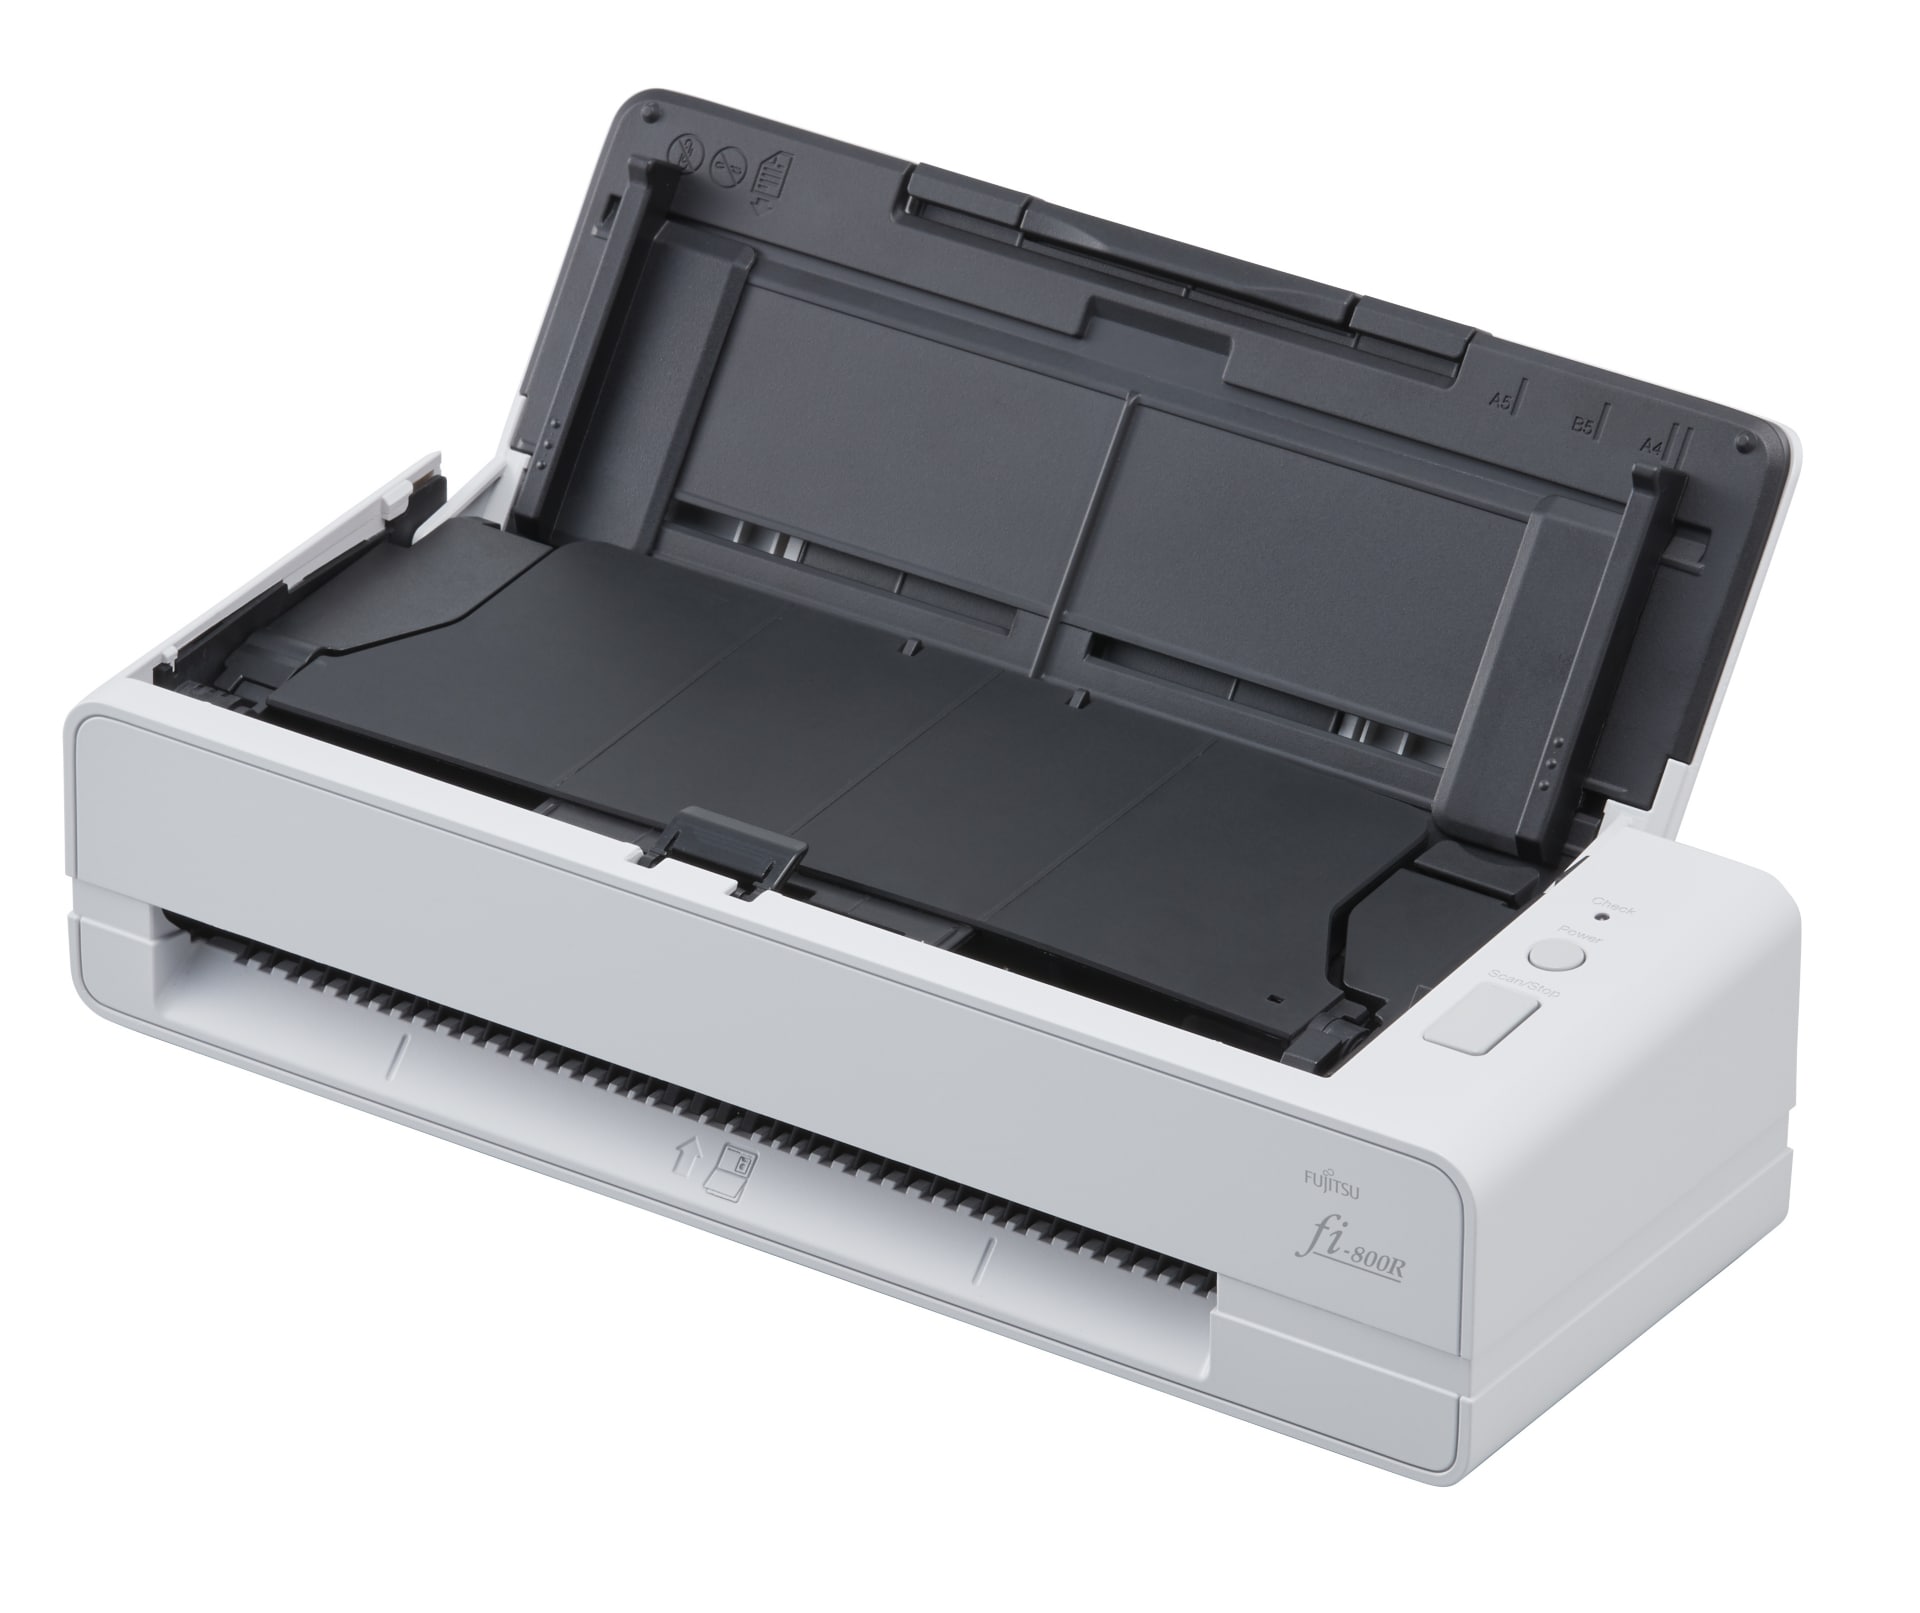 Fujitsu fi-800R document scanners